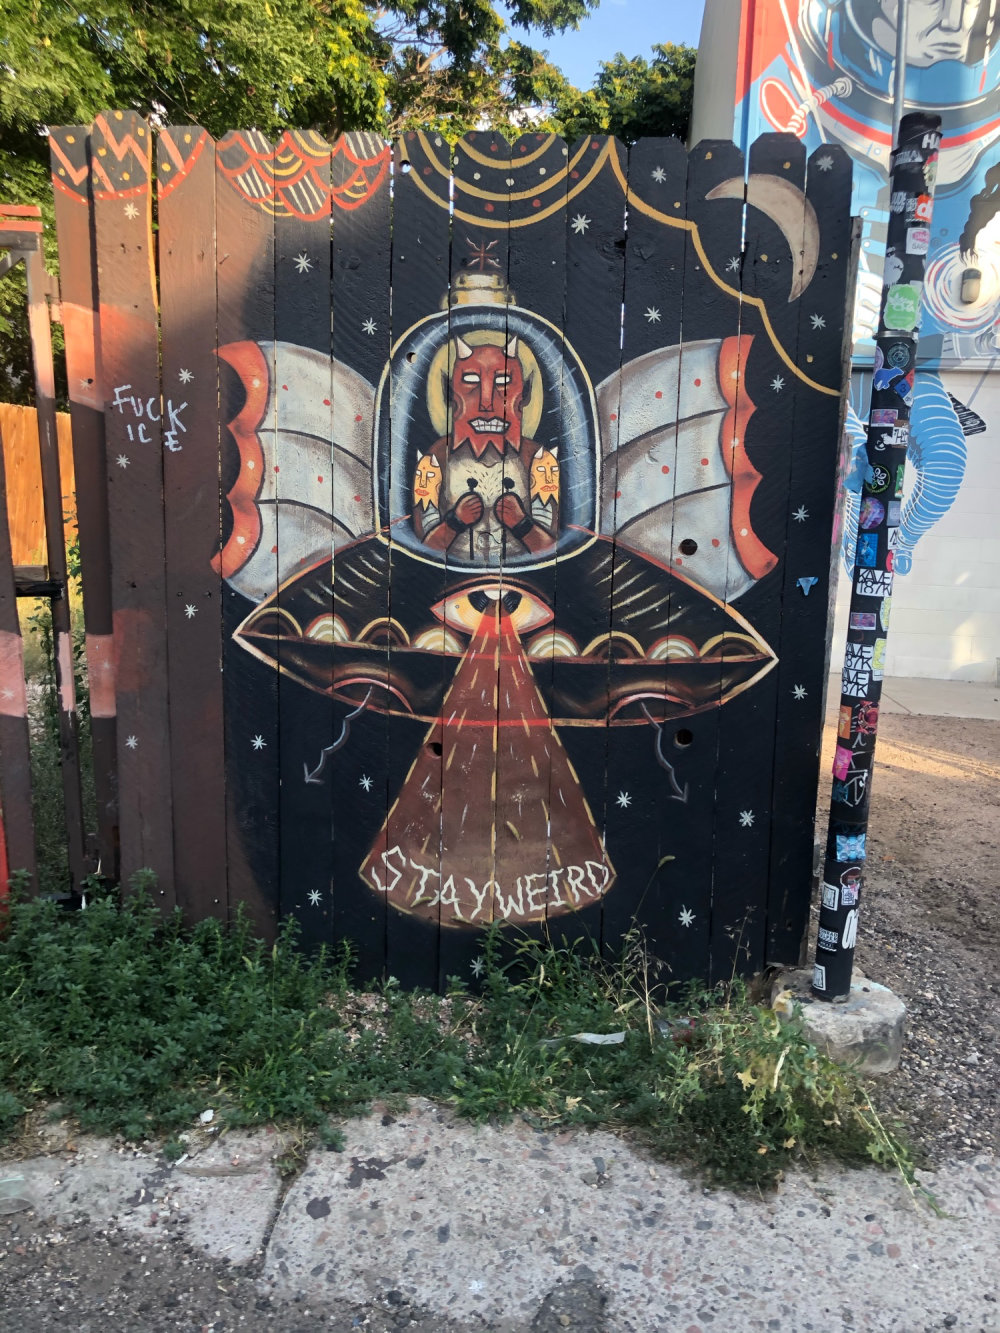 mural in Denver by artist unknown.